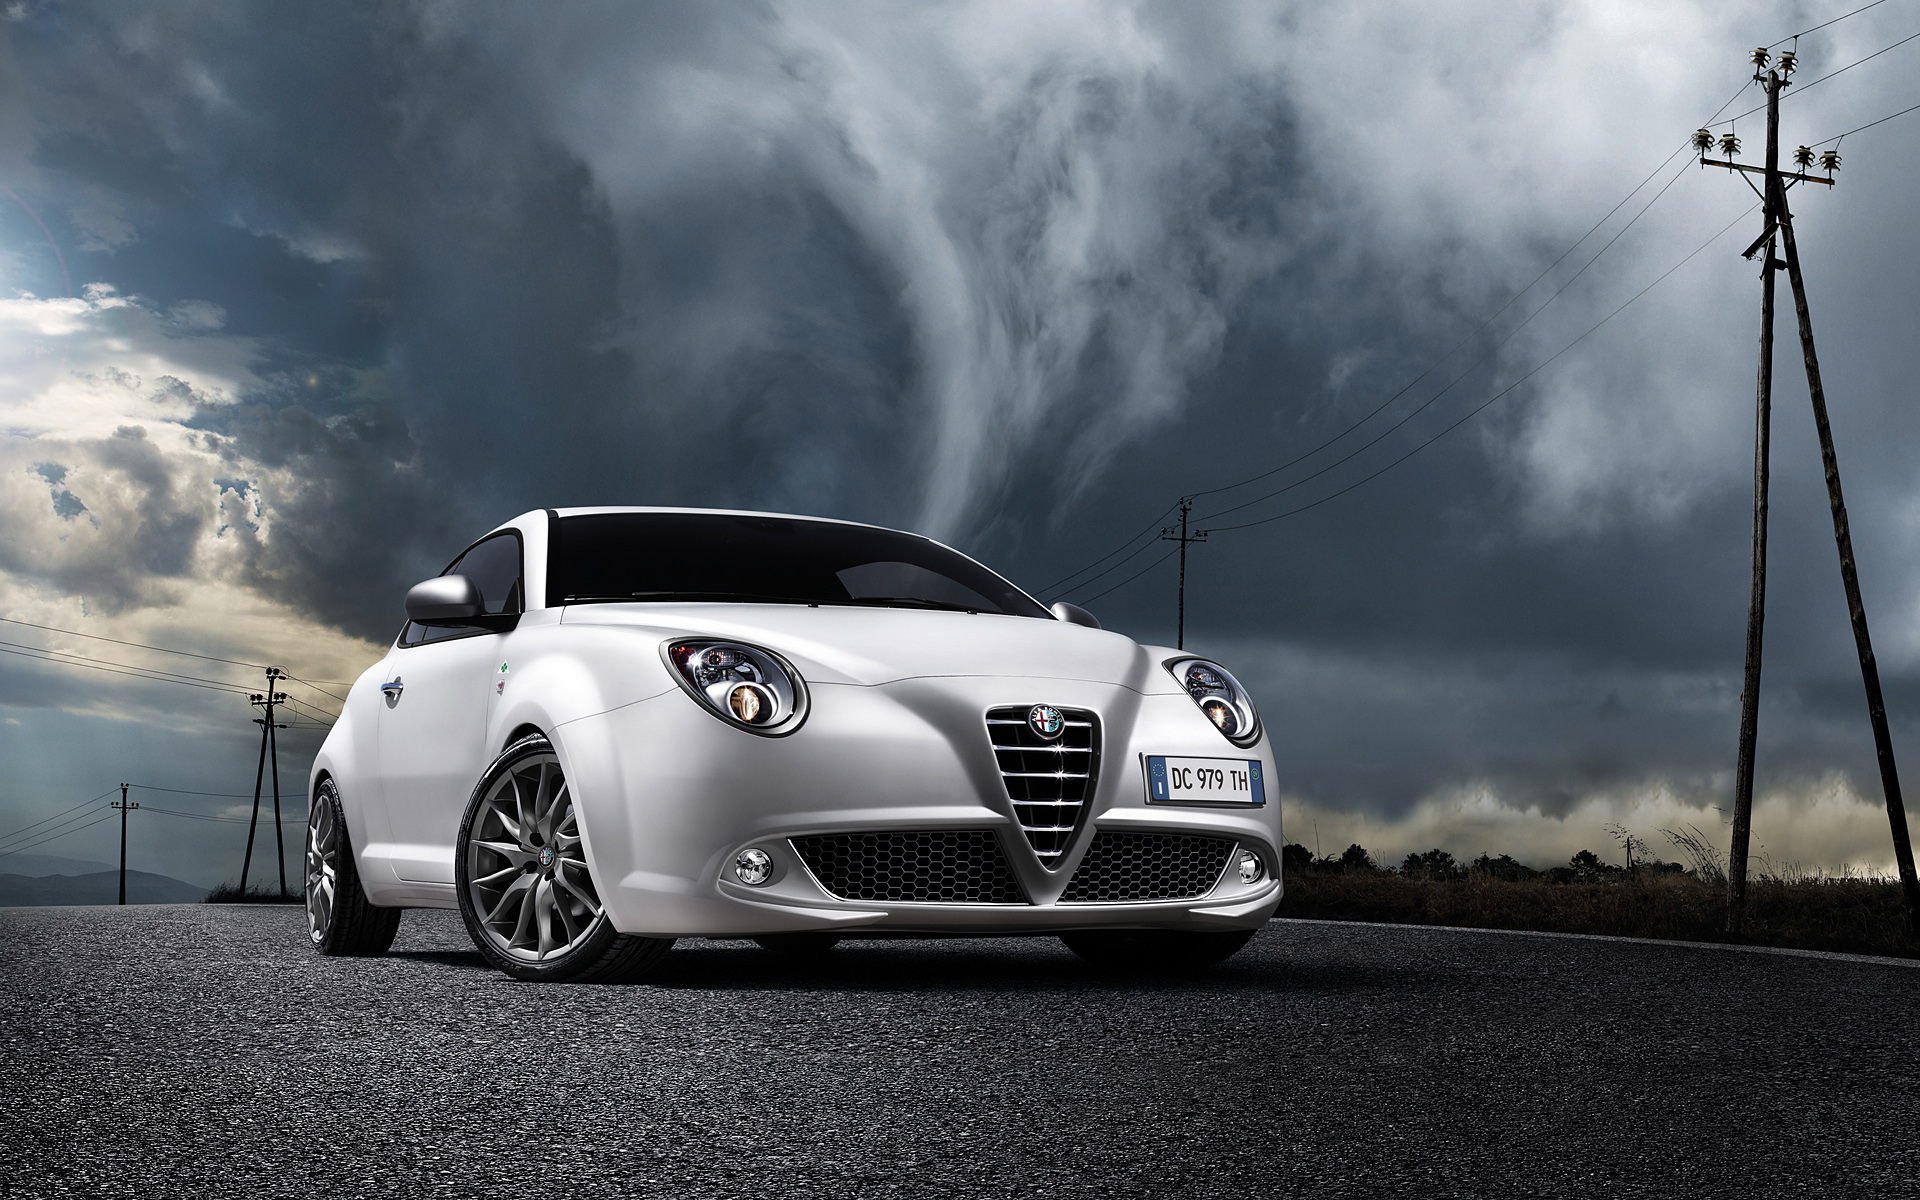 Descargar fondos de escritorio de Alfa Romeo Mito Quadrifoglio HD